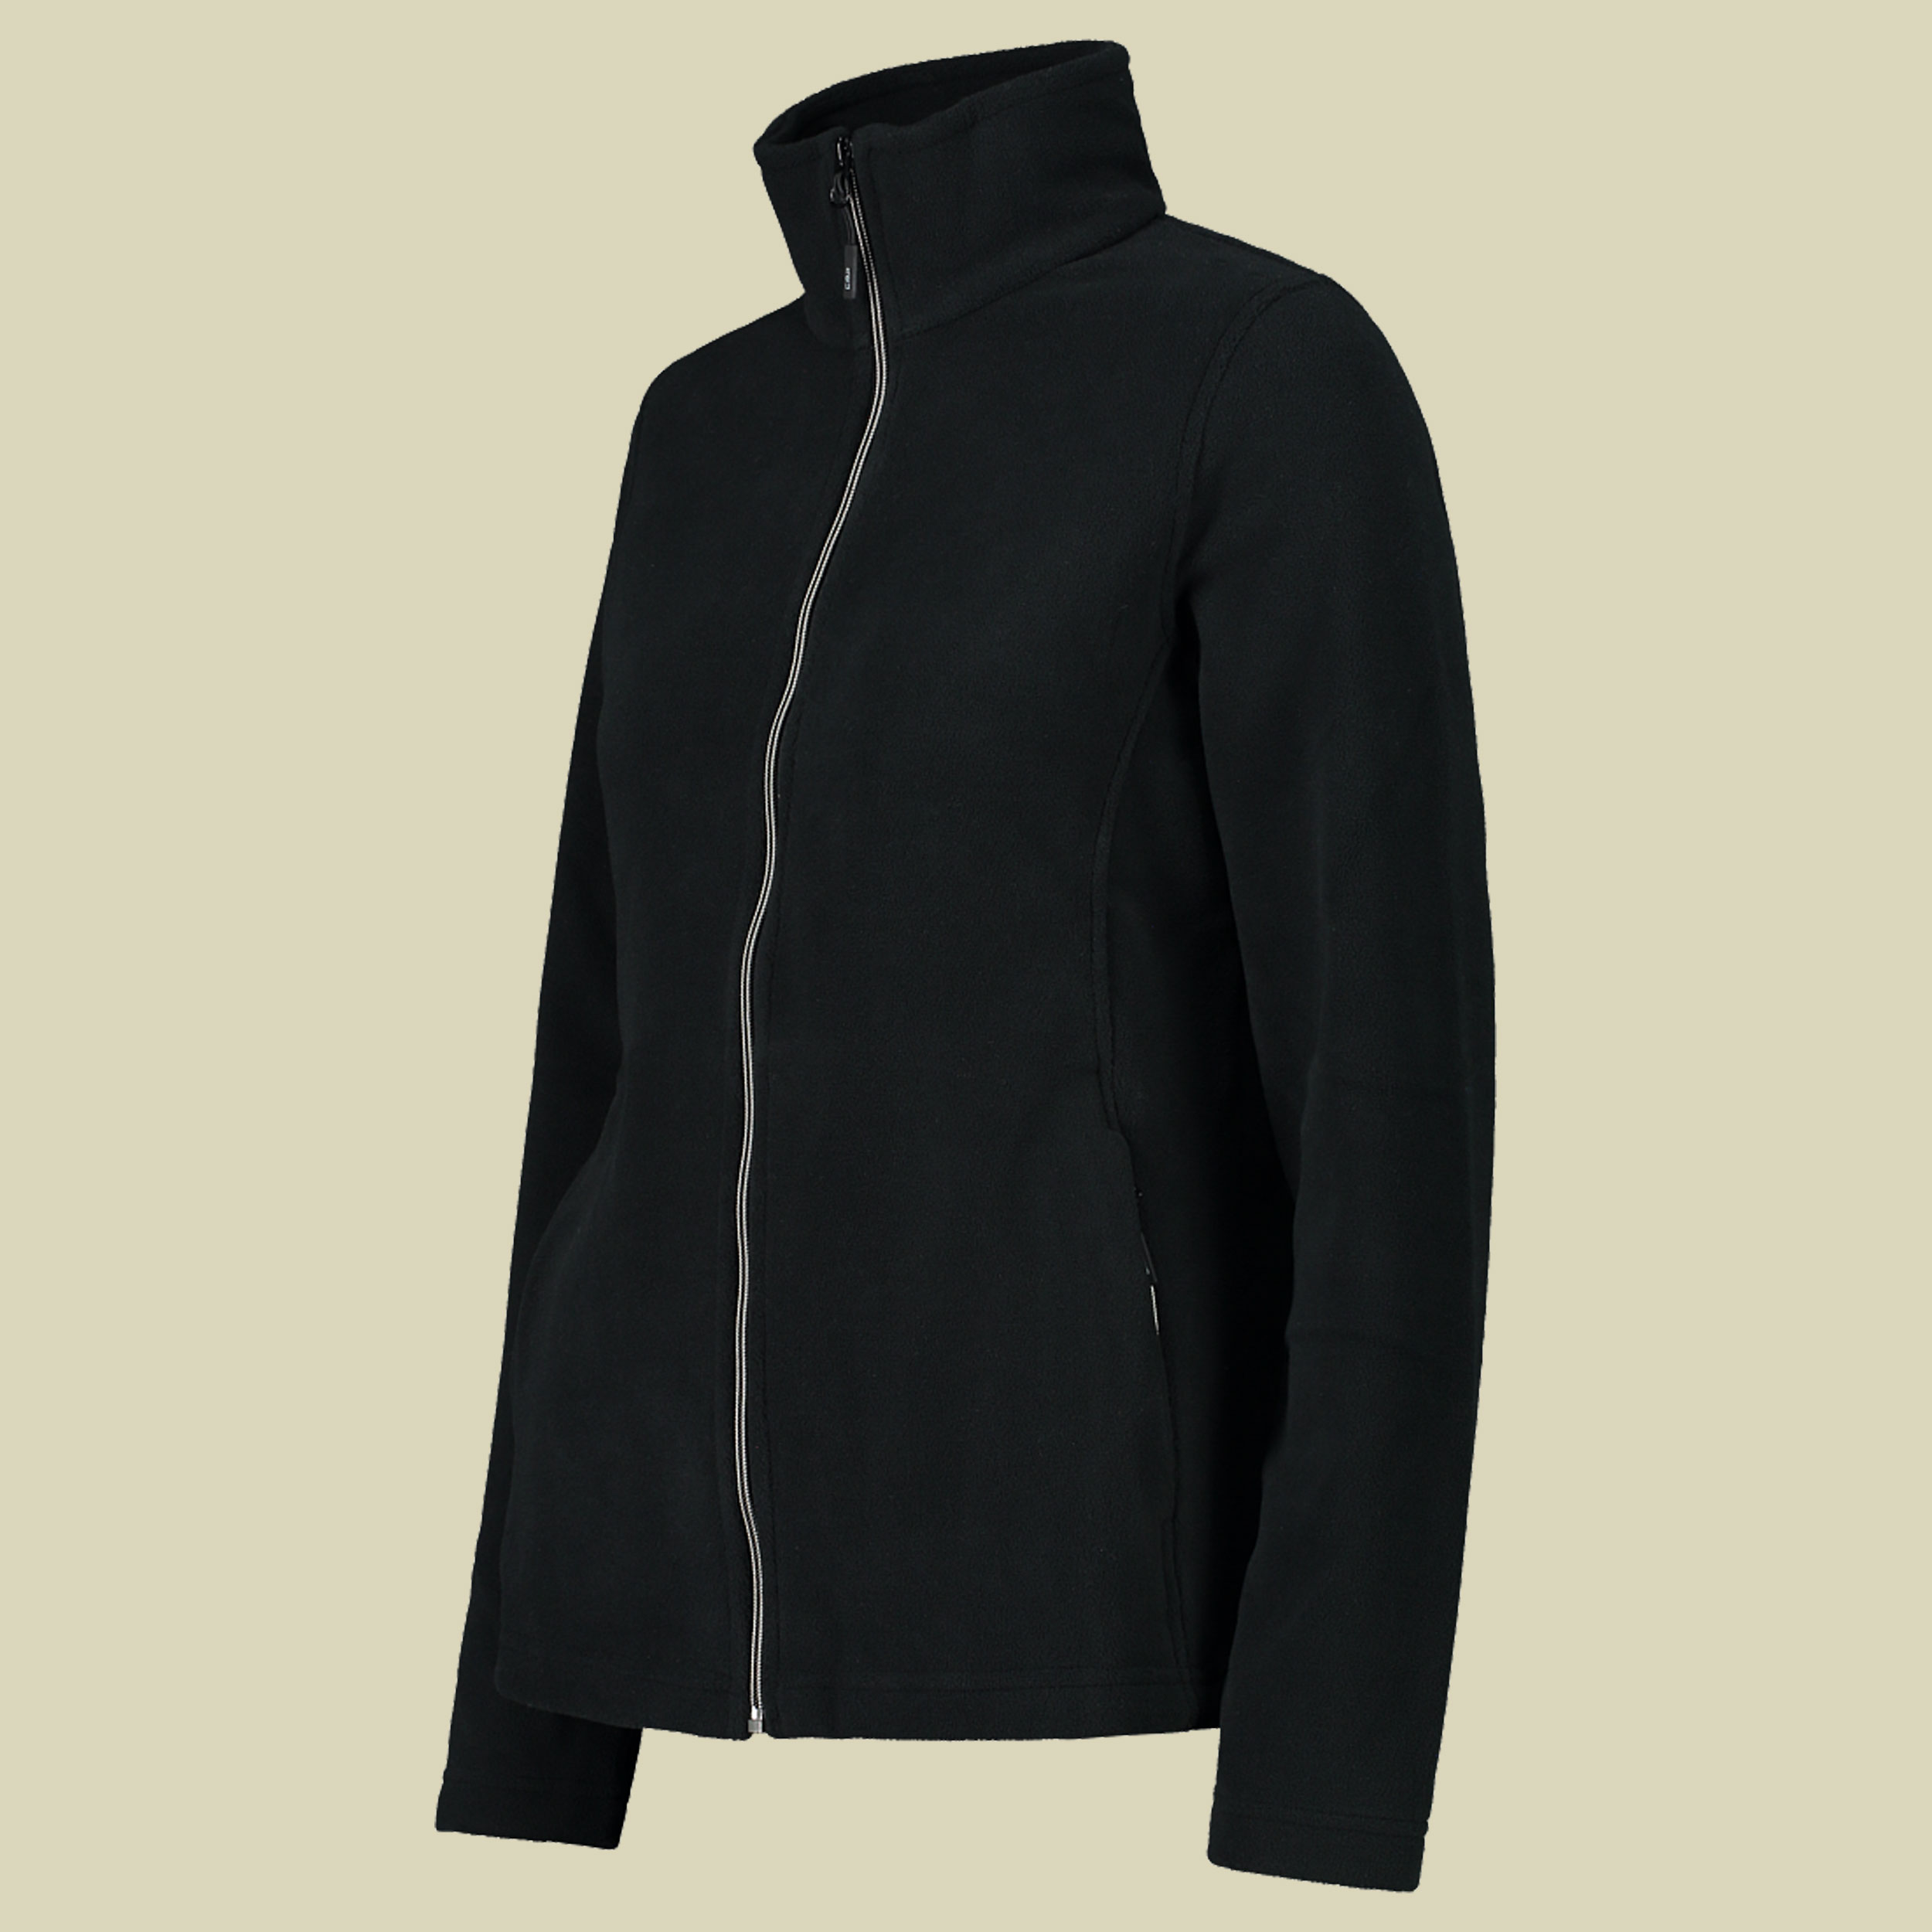 Woman Fleece Jacket 3H13216 Größe 44 Farbe 81BP nero-ice